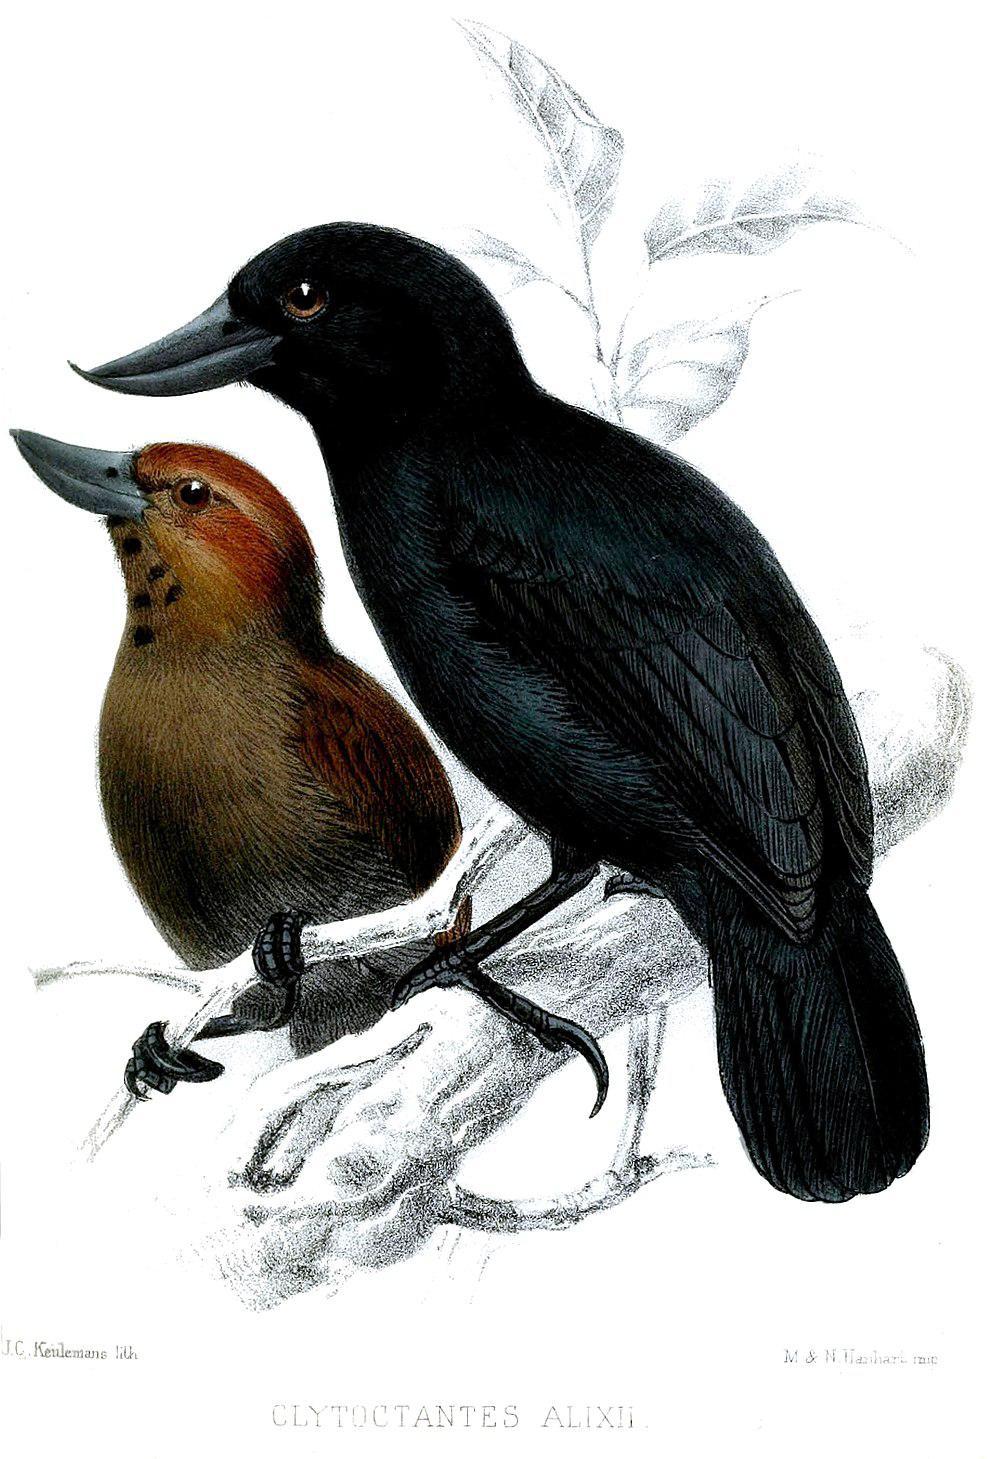 翘嘴丛蚁鵙 / Recurve-billed Bushbird / Clytoctantes alixii